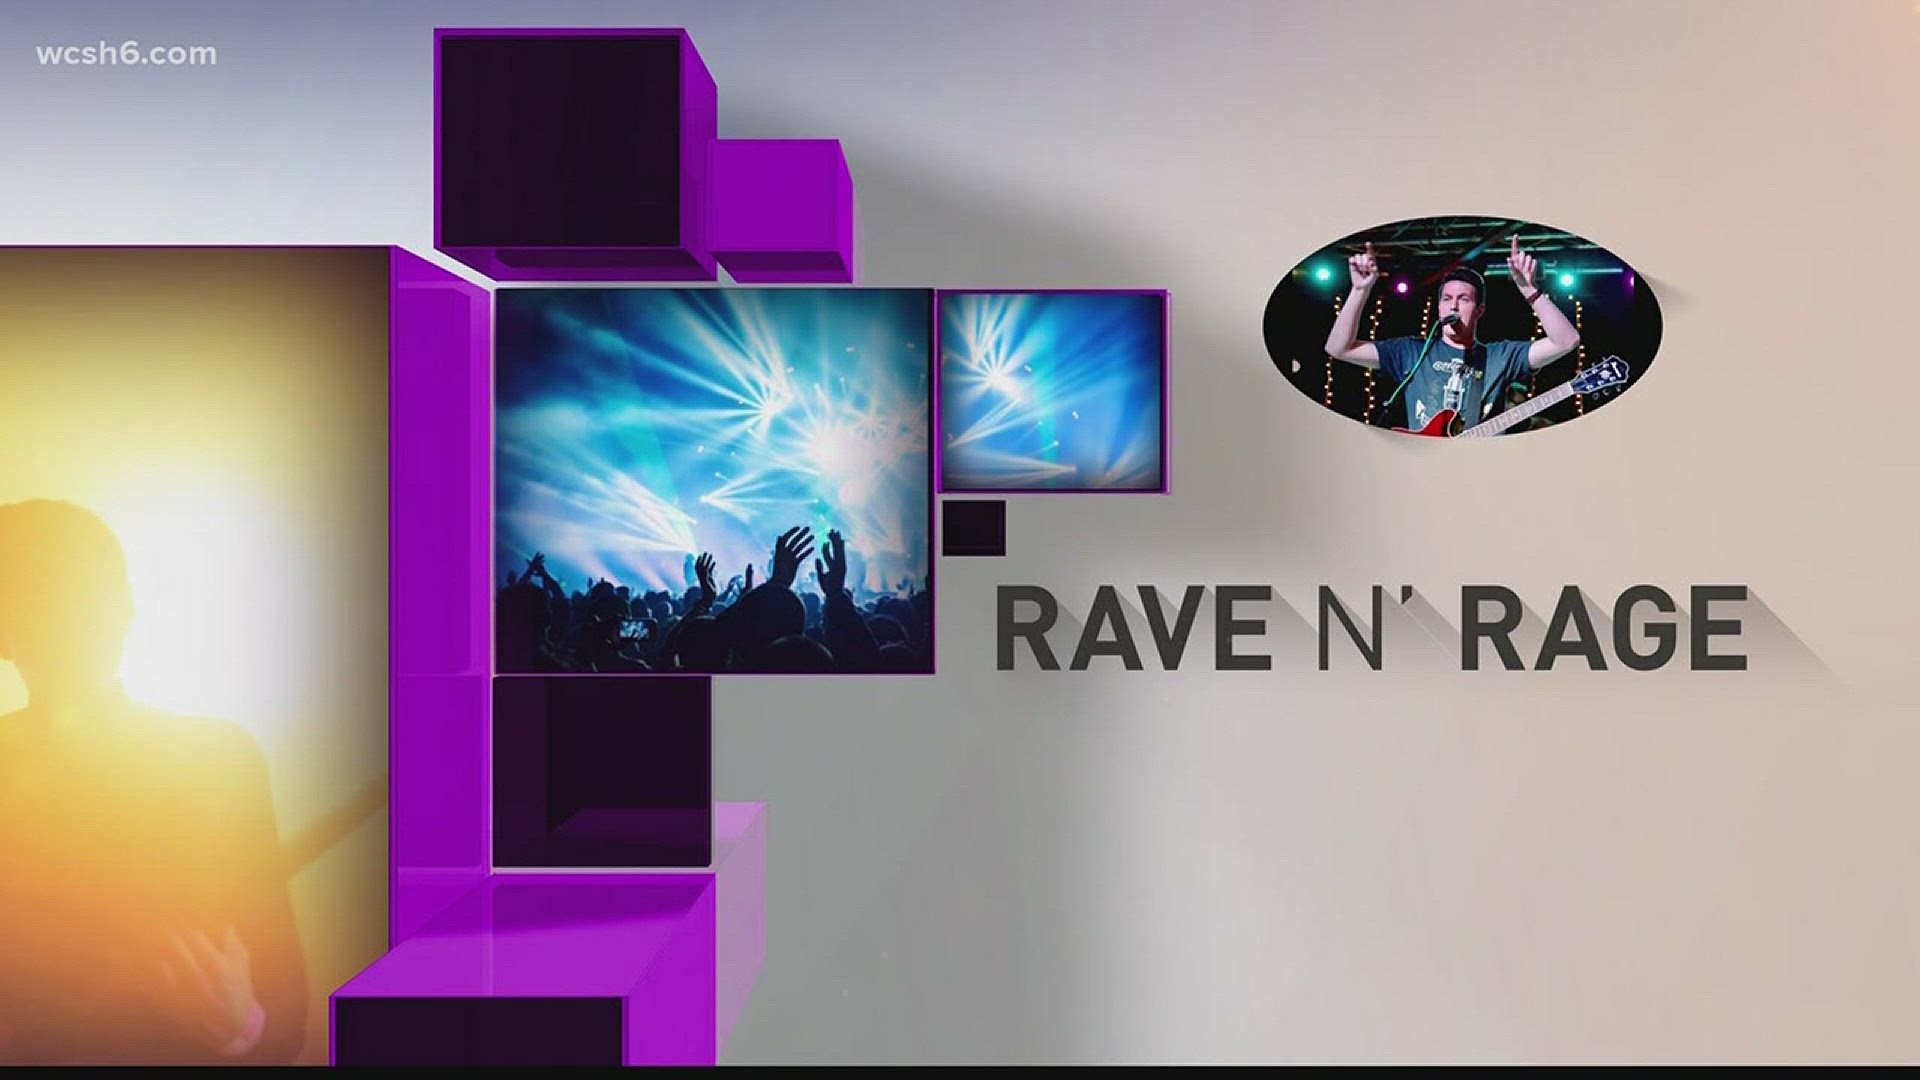 Rave N' Rage: Live Concerts This Weekend